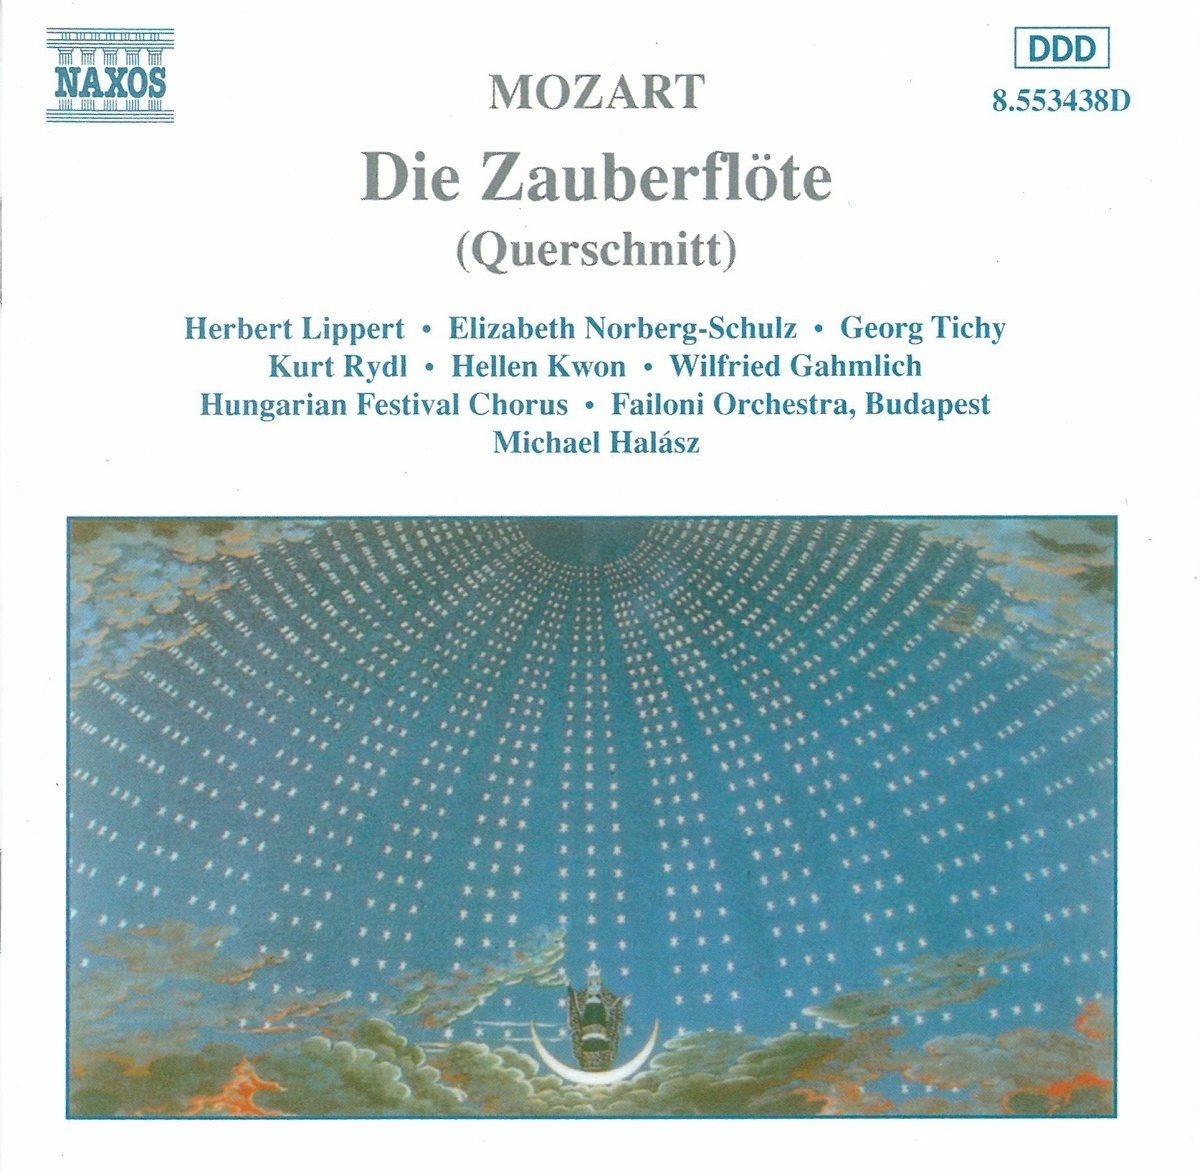 Die Zauberflöte (Qs) - Lippert  Norberg-Schulz  Tichy. (CD)